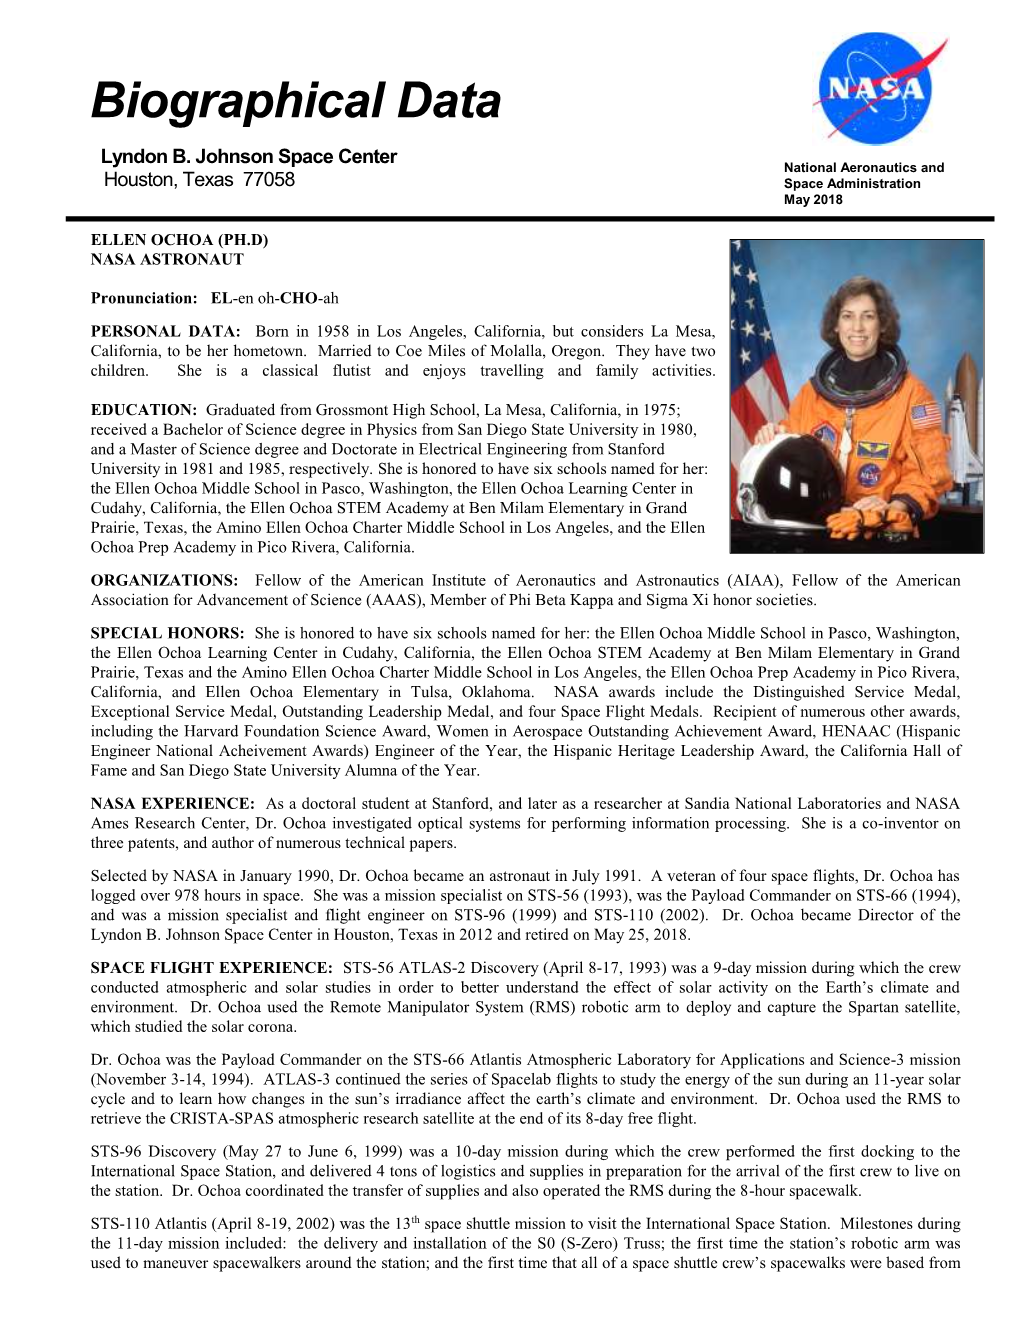 Ellen Ochoa (Ph.D) Nasa Astronaut